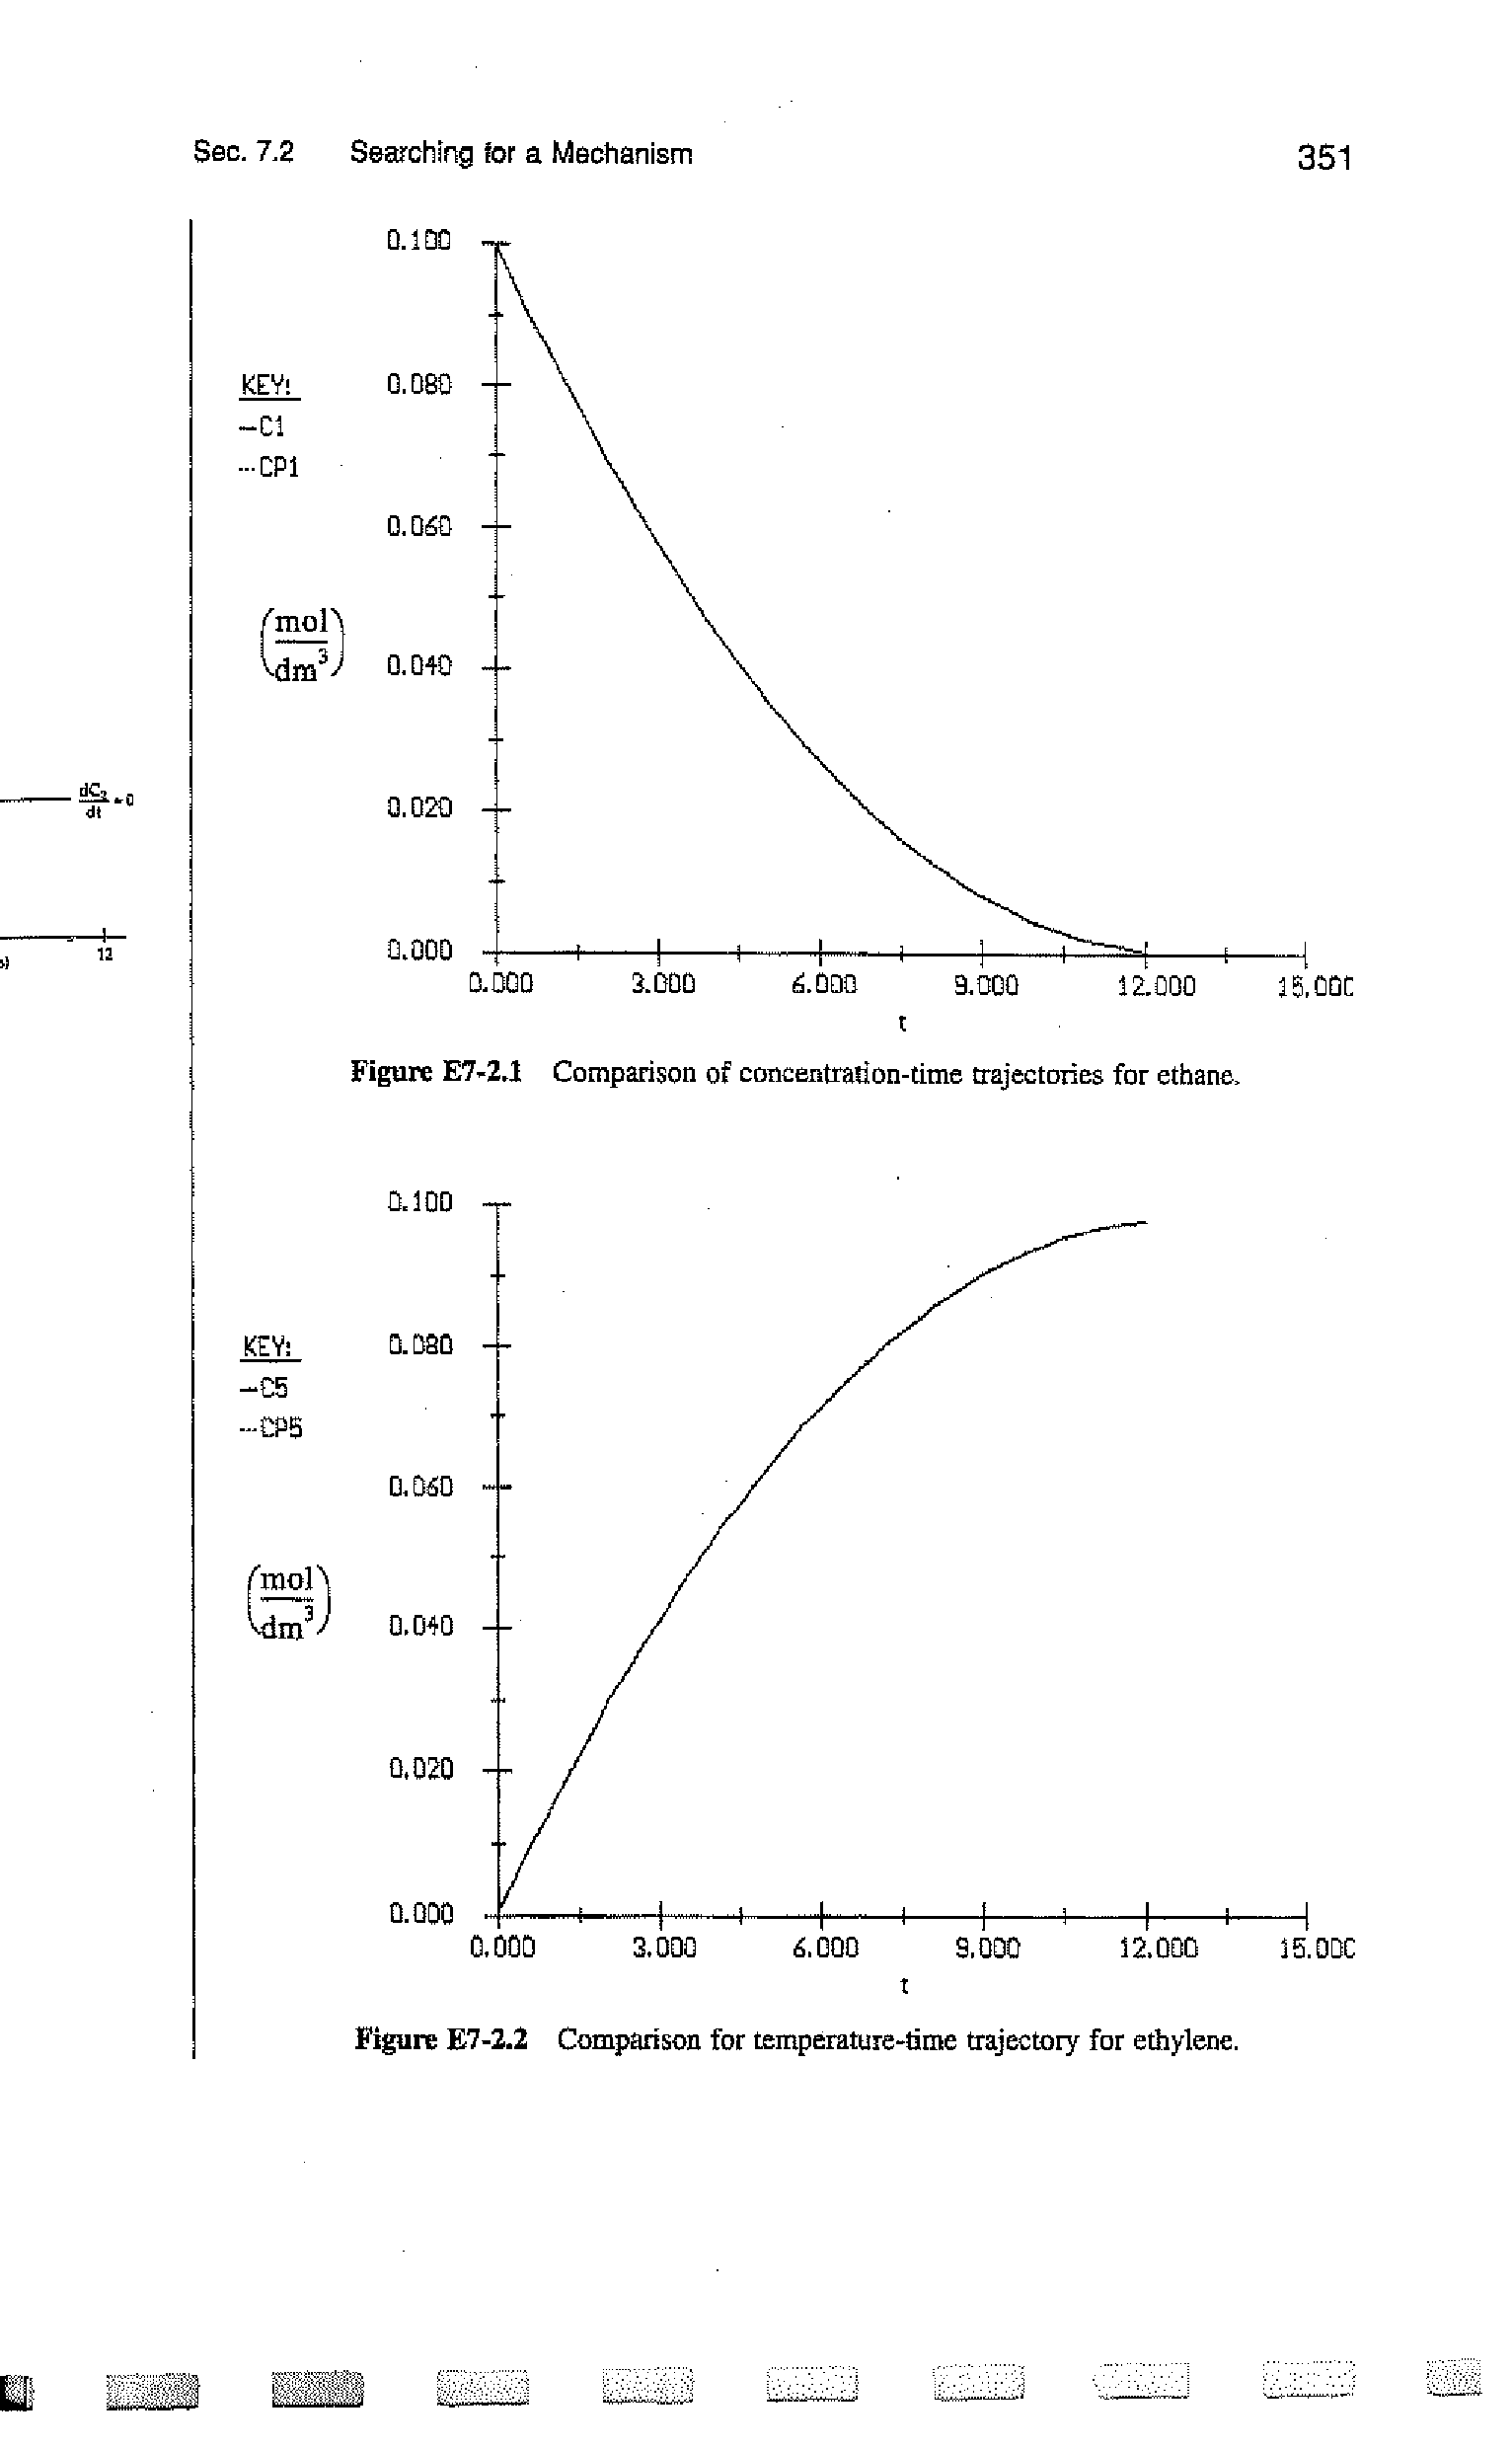 Figure E7-2.2 Comparison for temperature-time trajectory for ethylene.